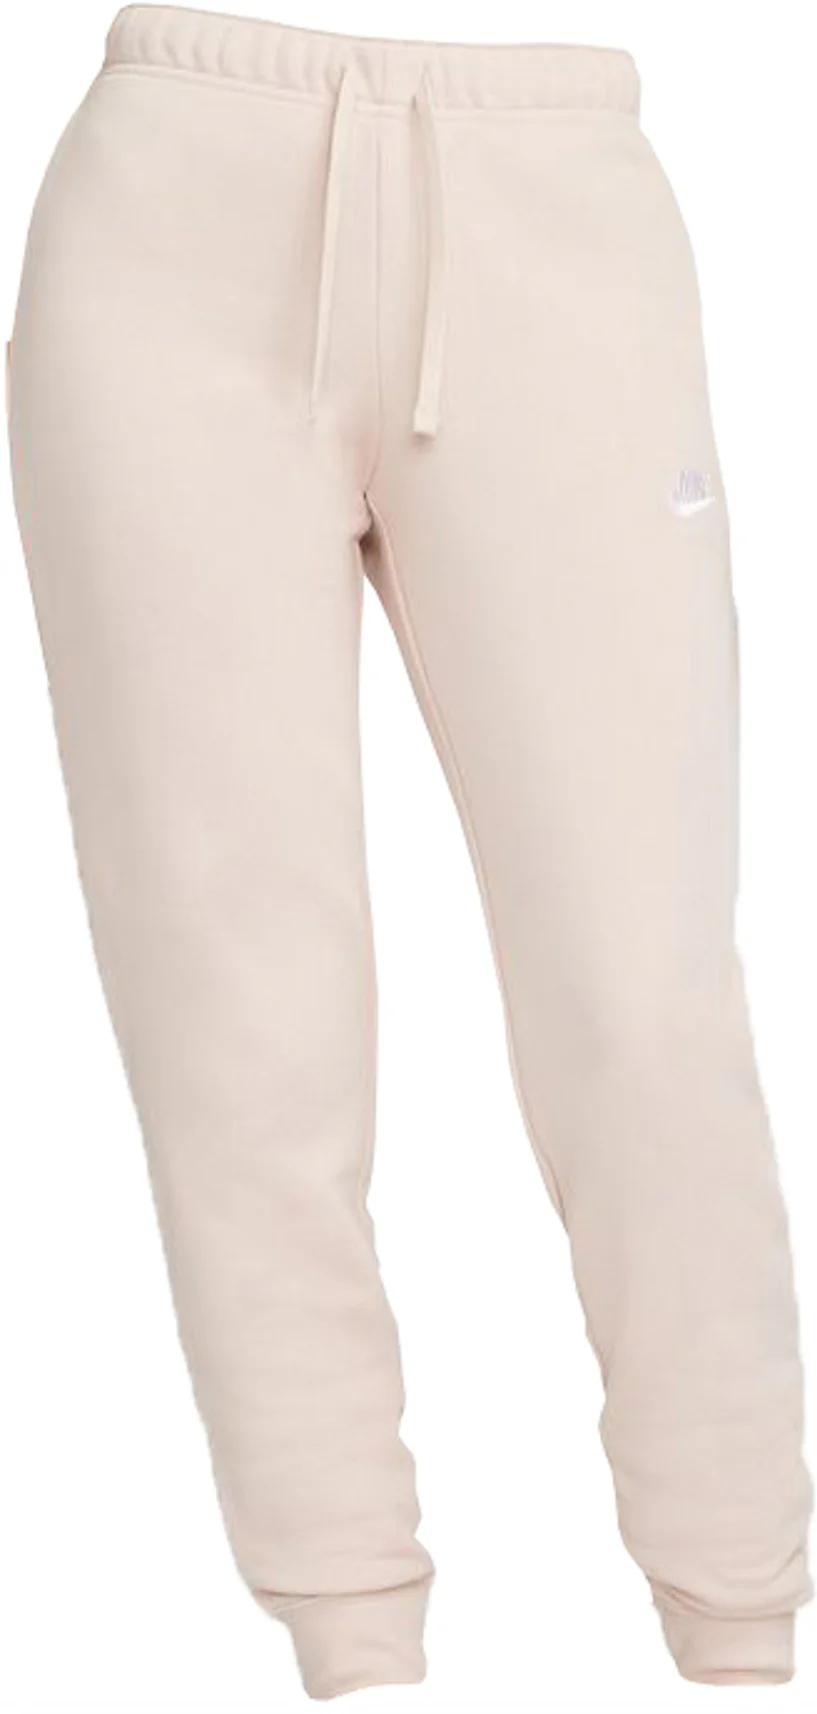 Nike Sportswear Women's Club Fleece Jogger Pants Pink Oxford/White